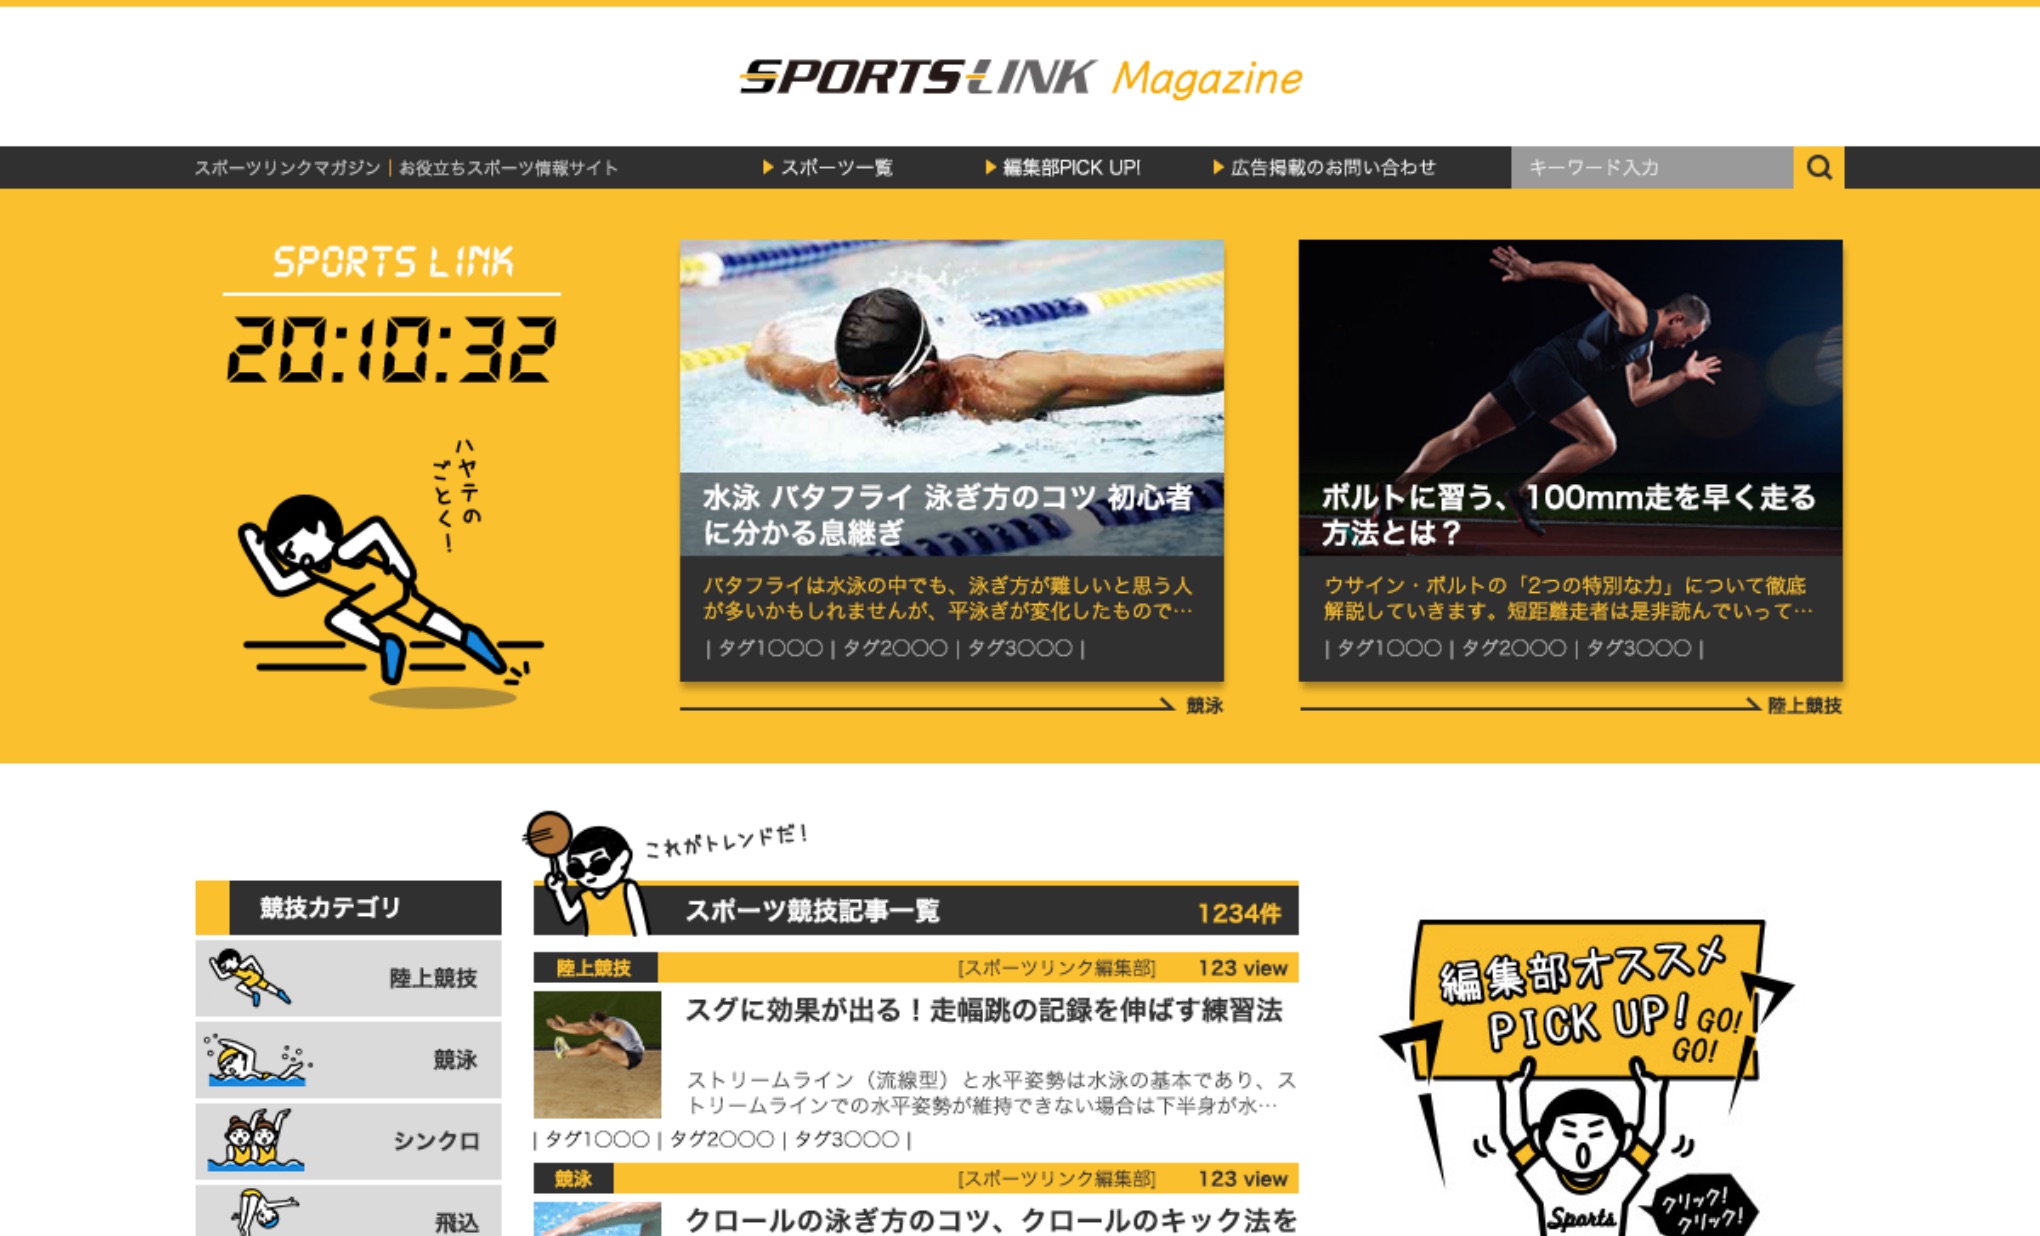 Sports Link Magazine